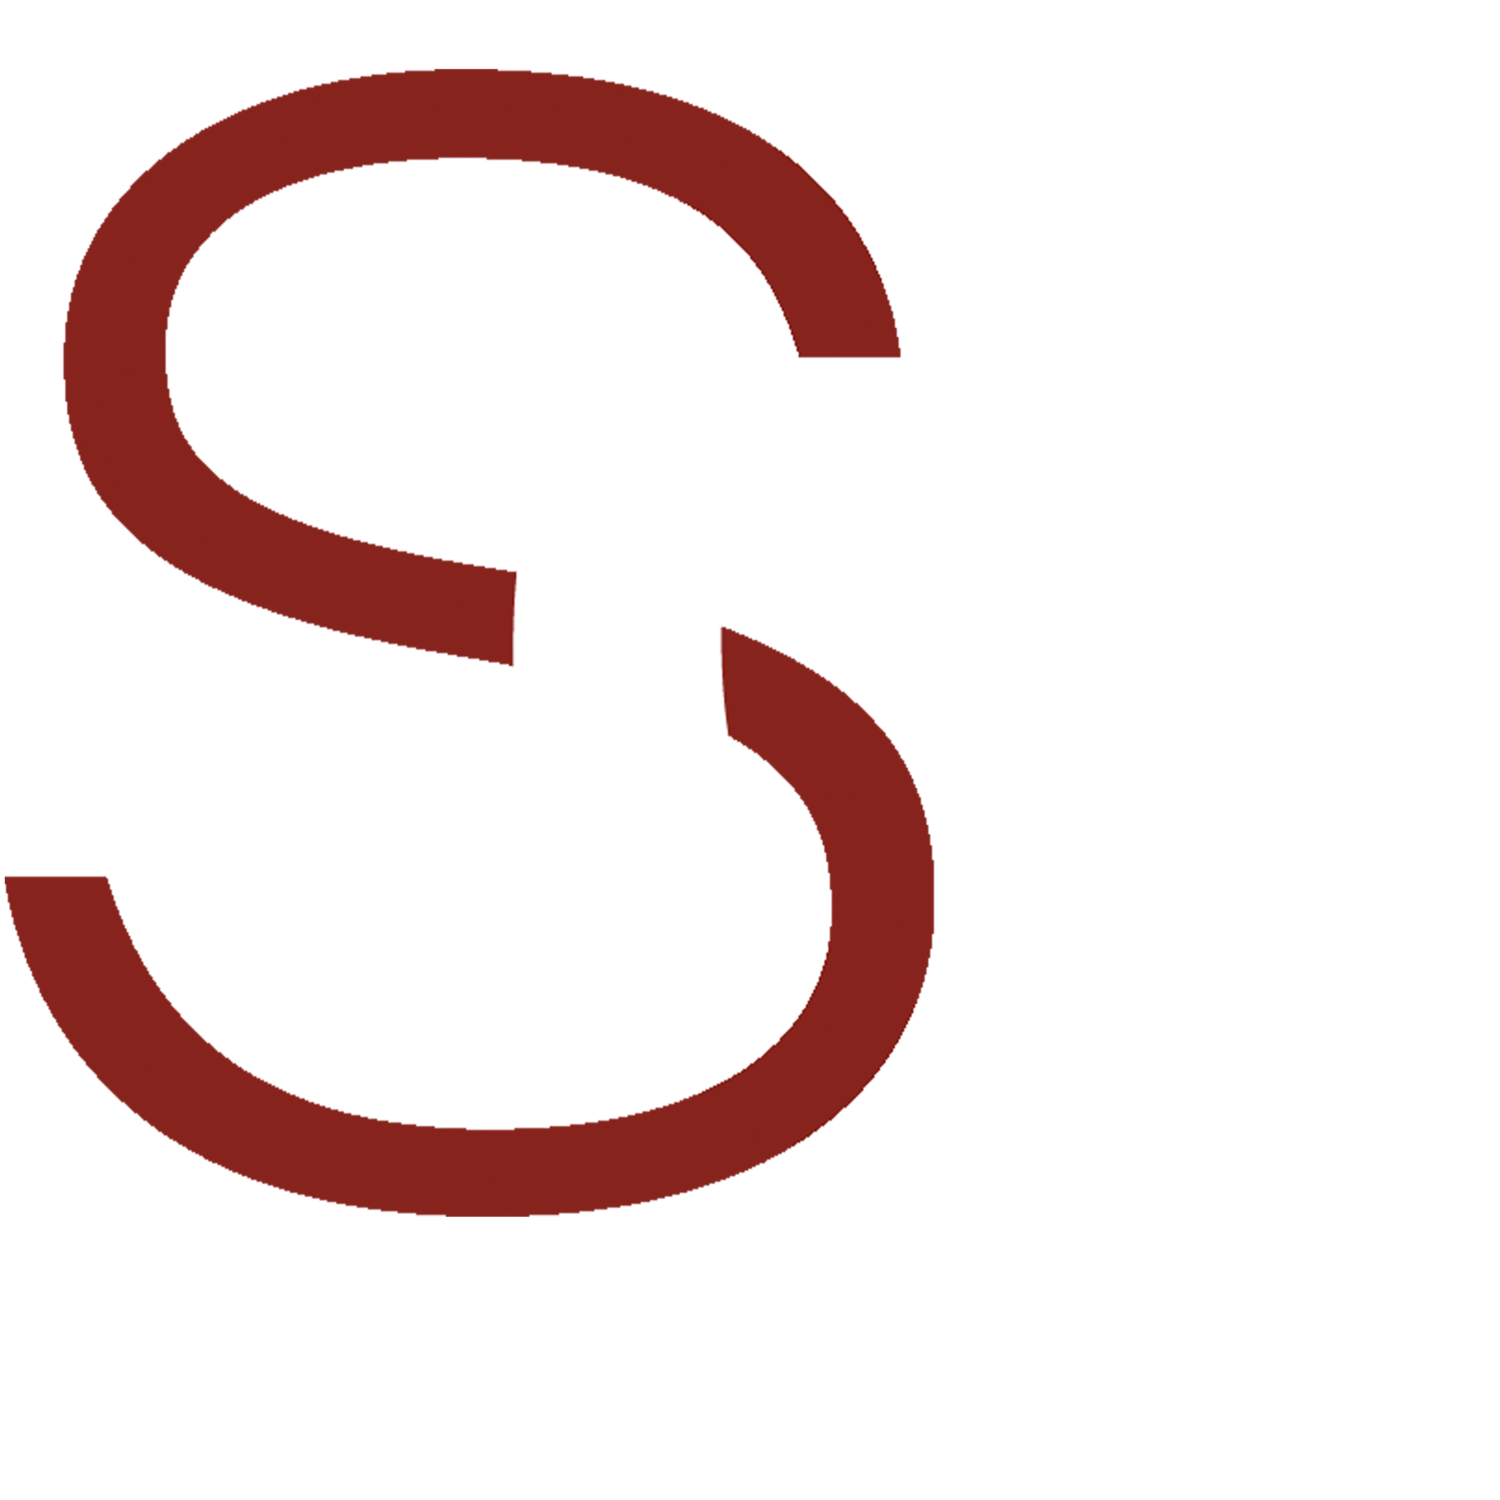 SG Entertainment